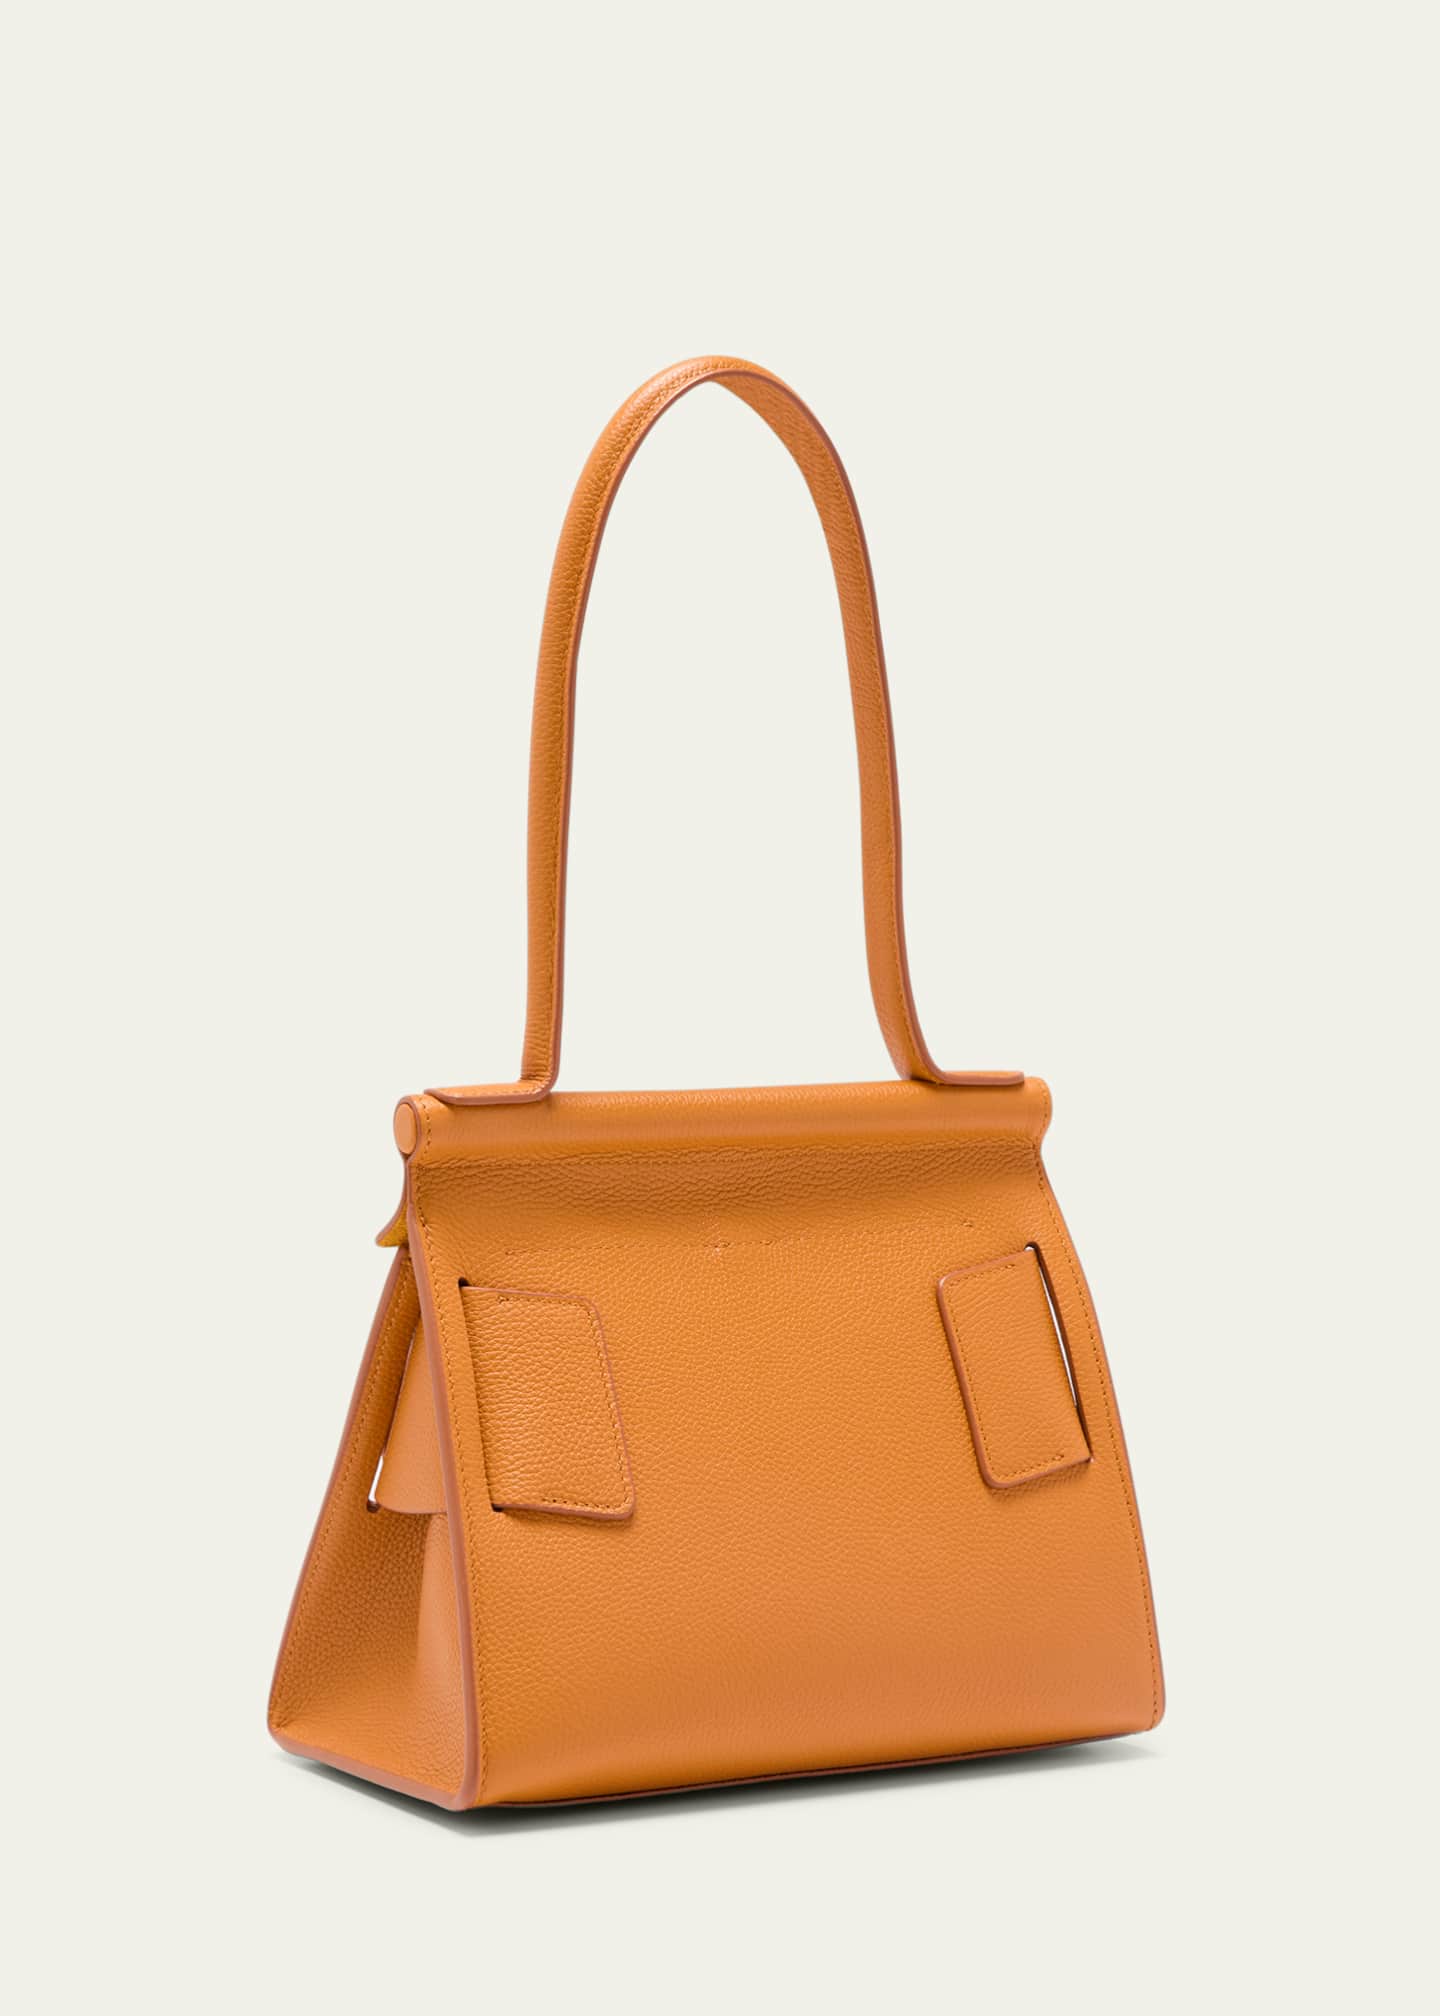 Boyy Handbags on Sale